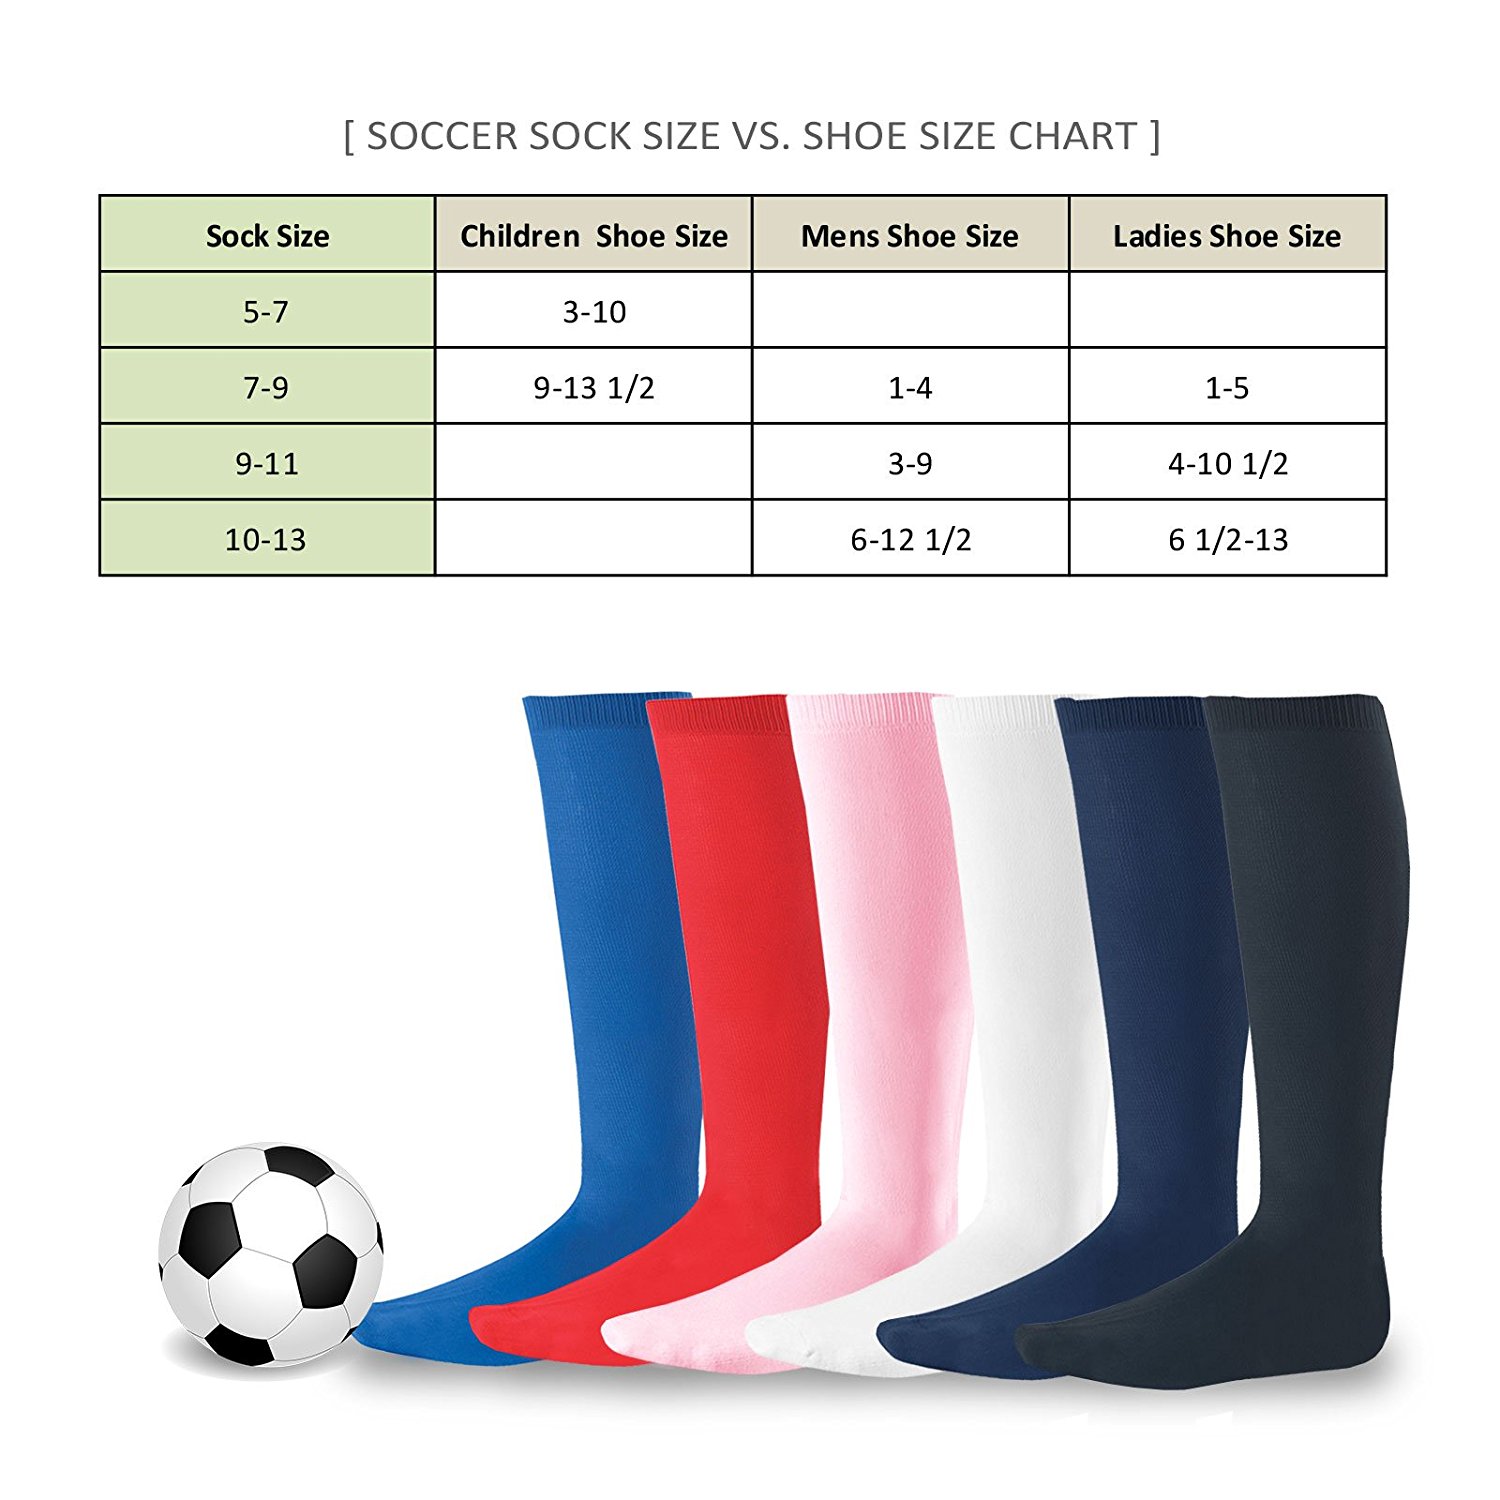 Unisex Kids Youth Sock Size 5-7 Soccer Team Sports Cushion Acrylic Knee High Socks 3 Pair Navy - image 2 of 2